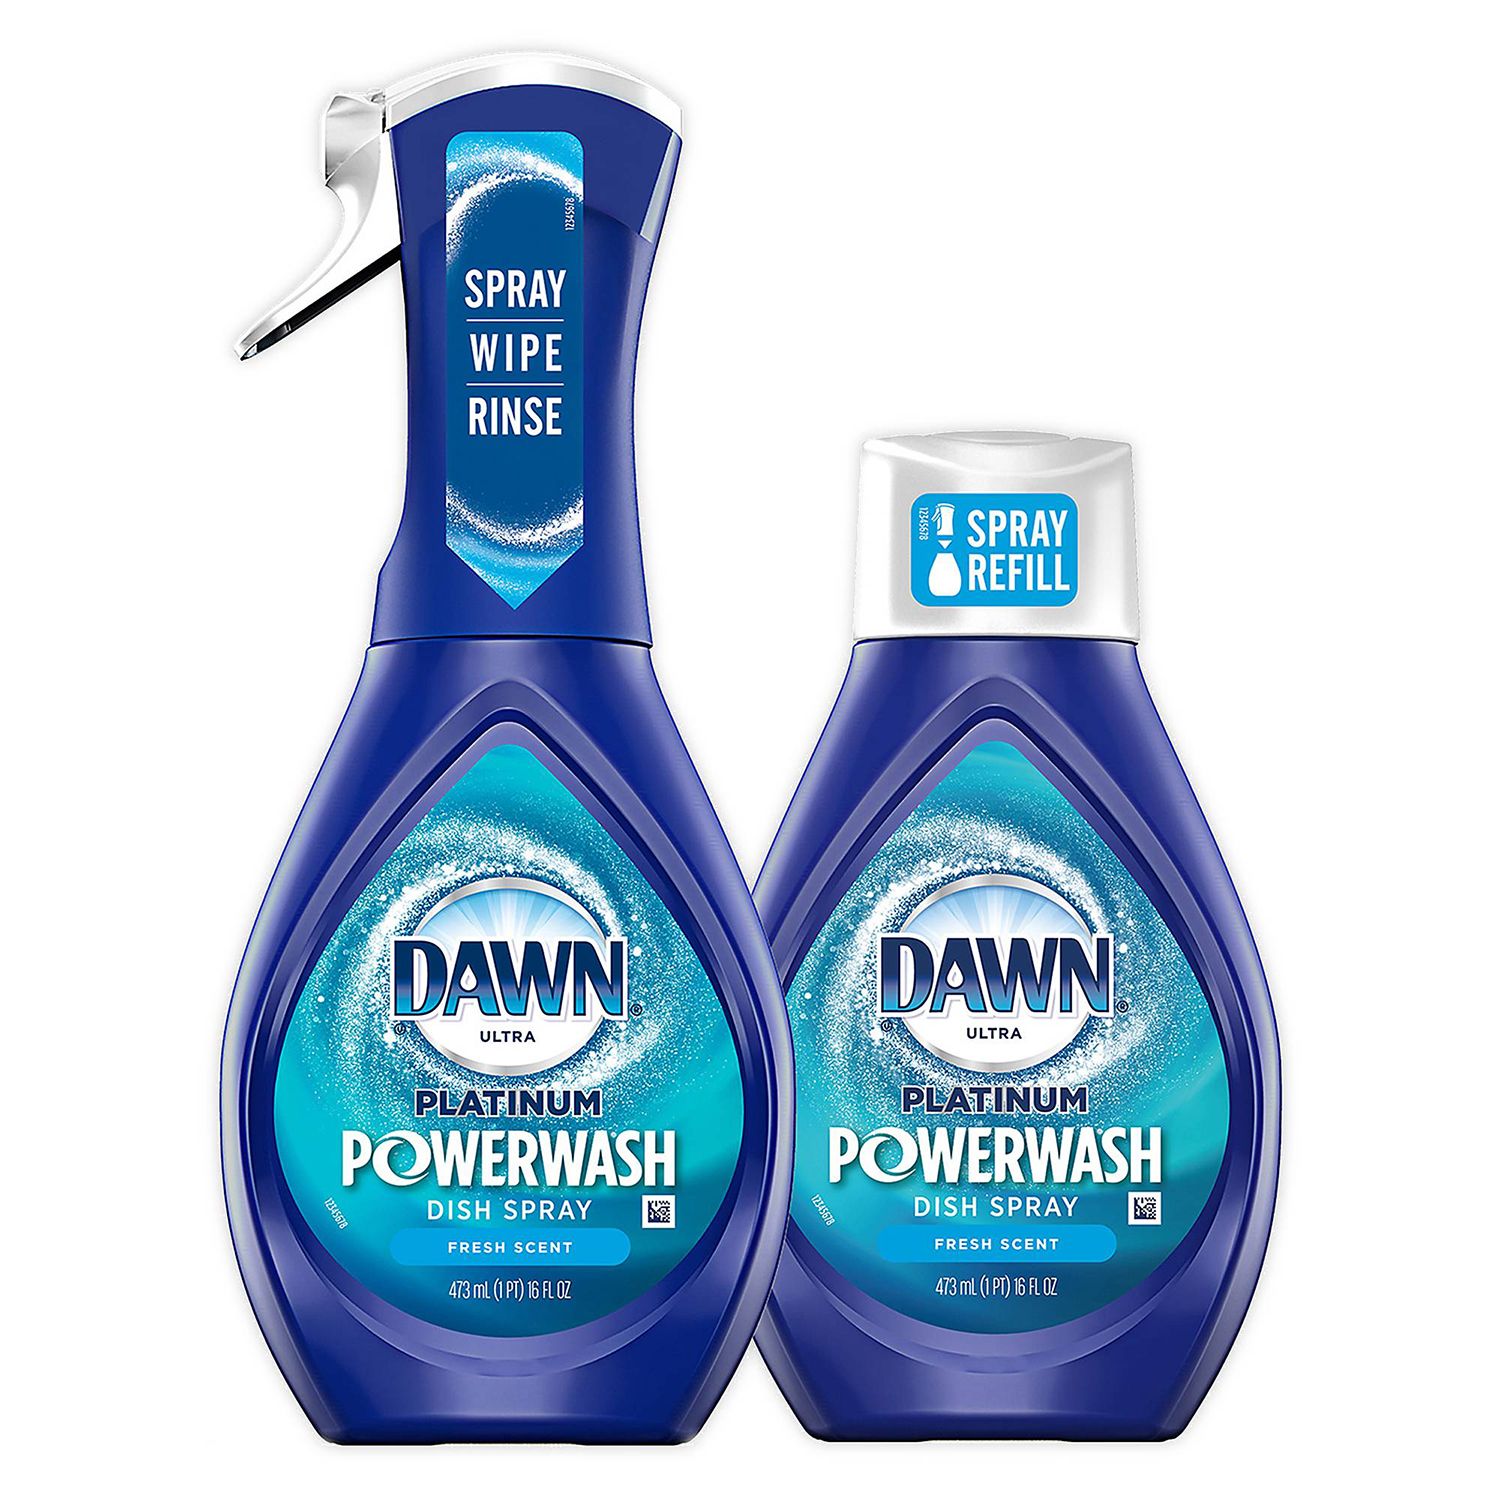 Dawn Ultra Platinum Powerwash nõudepihustuskimp